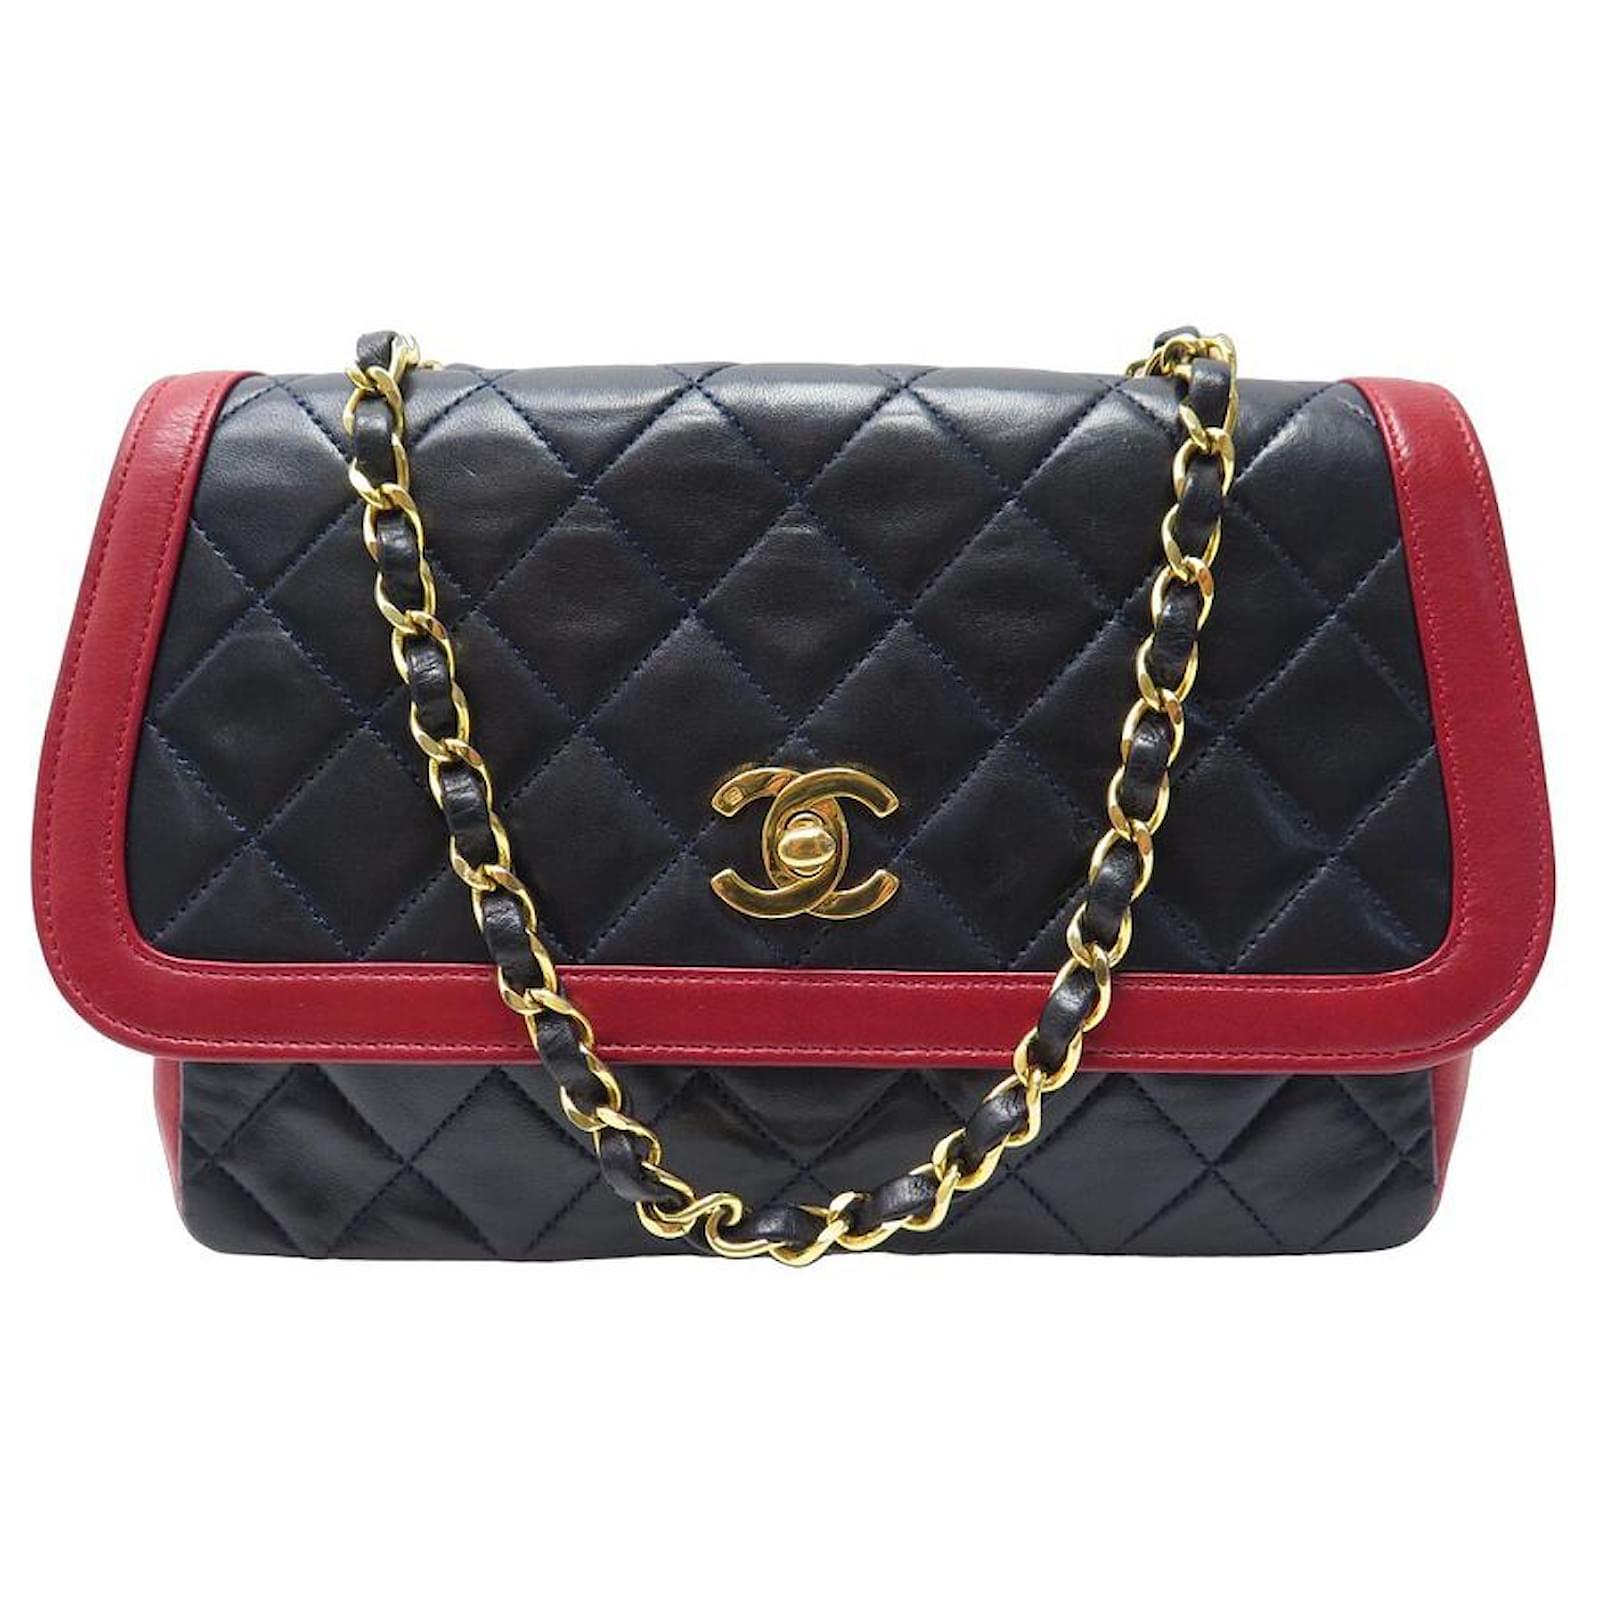 Handbags Chanel Vintage Chanel Handbag Timeless PM Leather Quilted Crossbody Bag